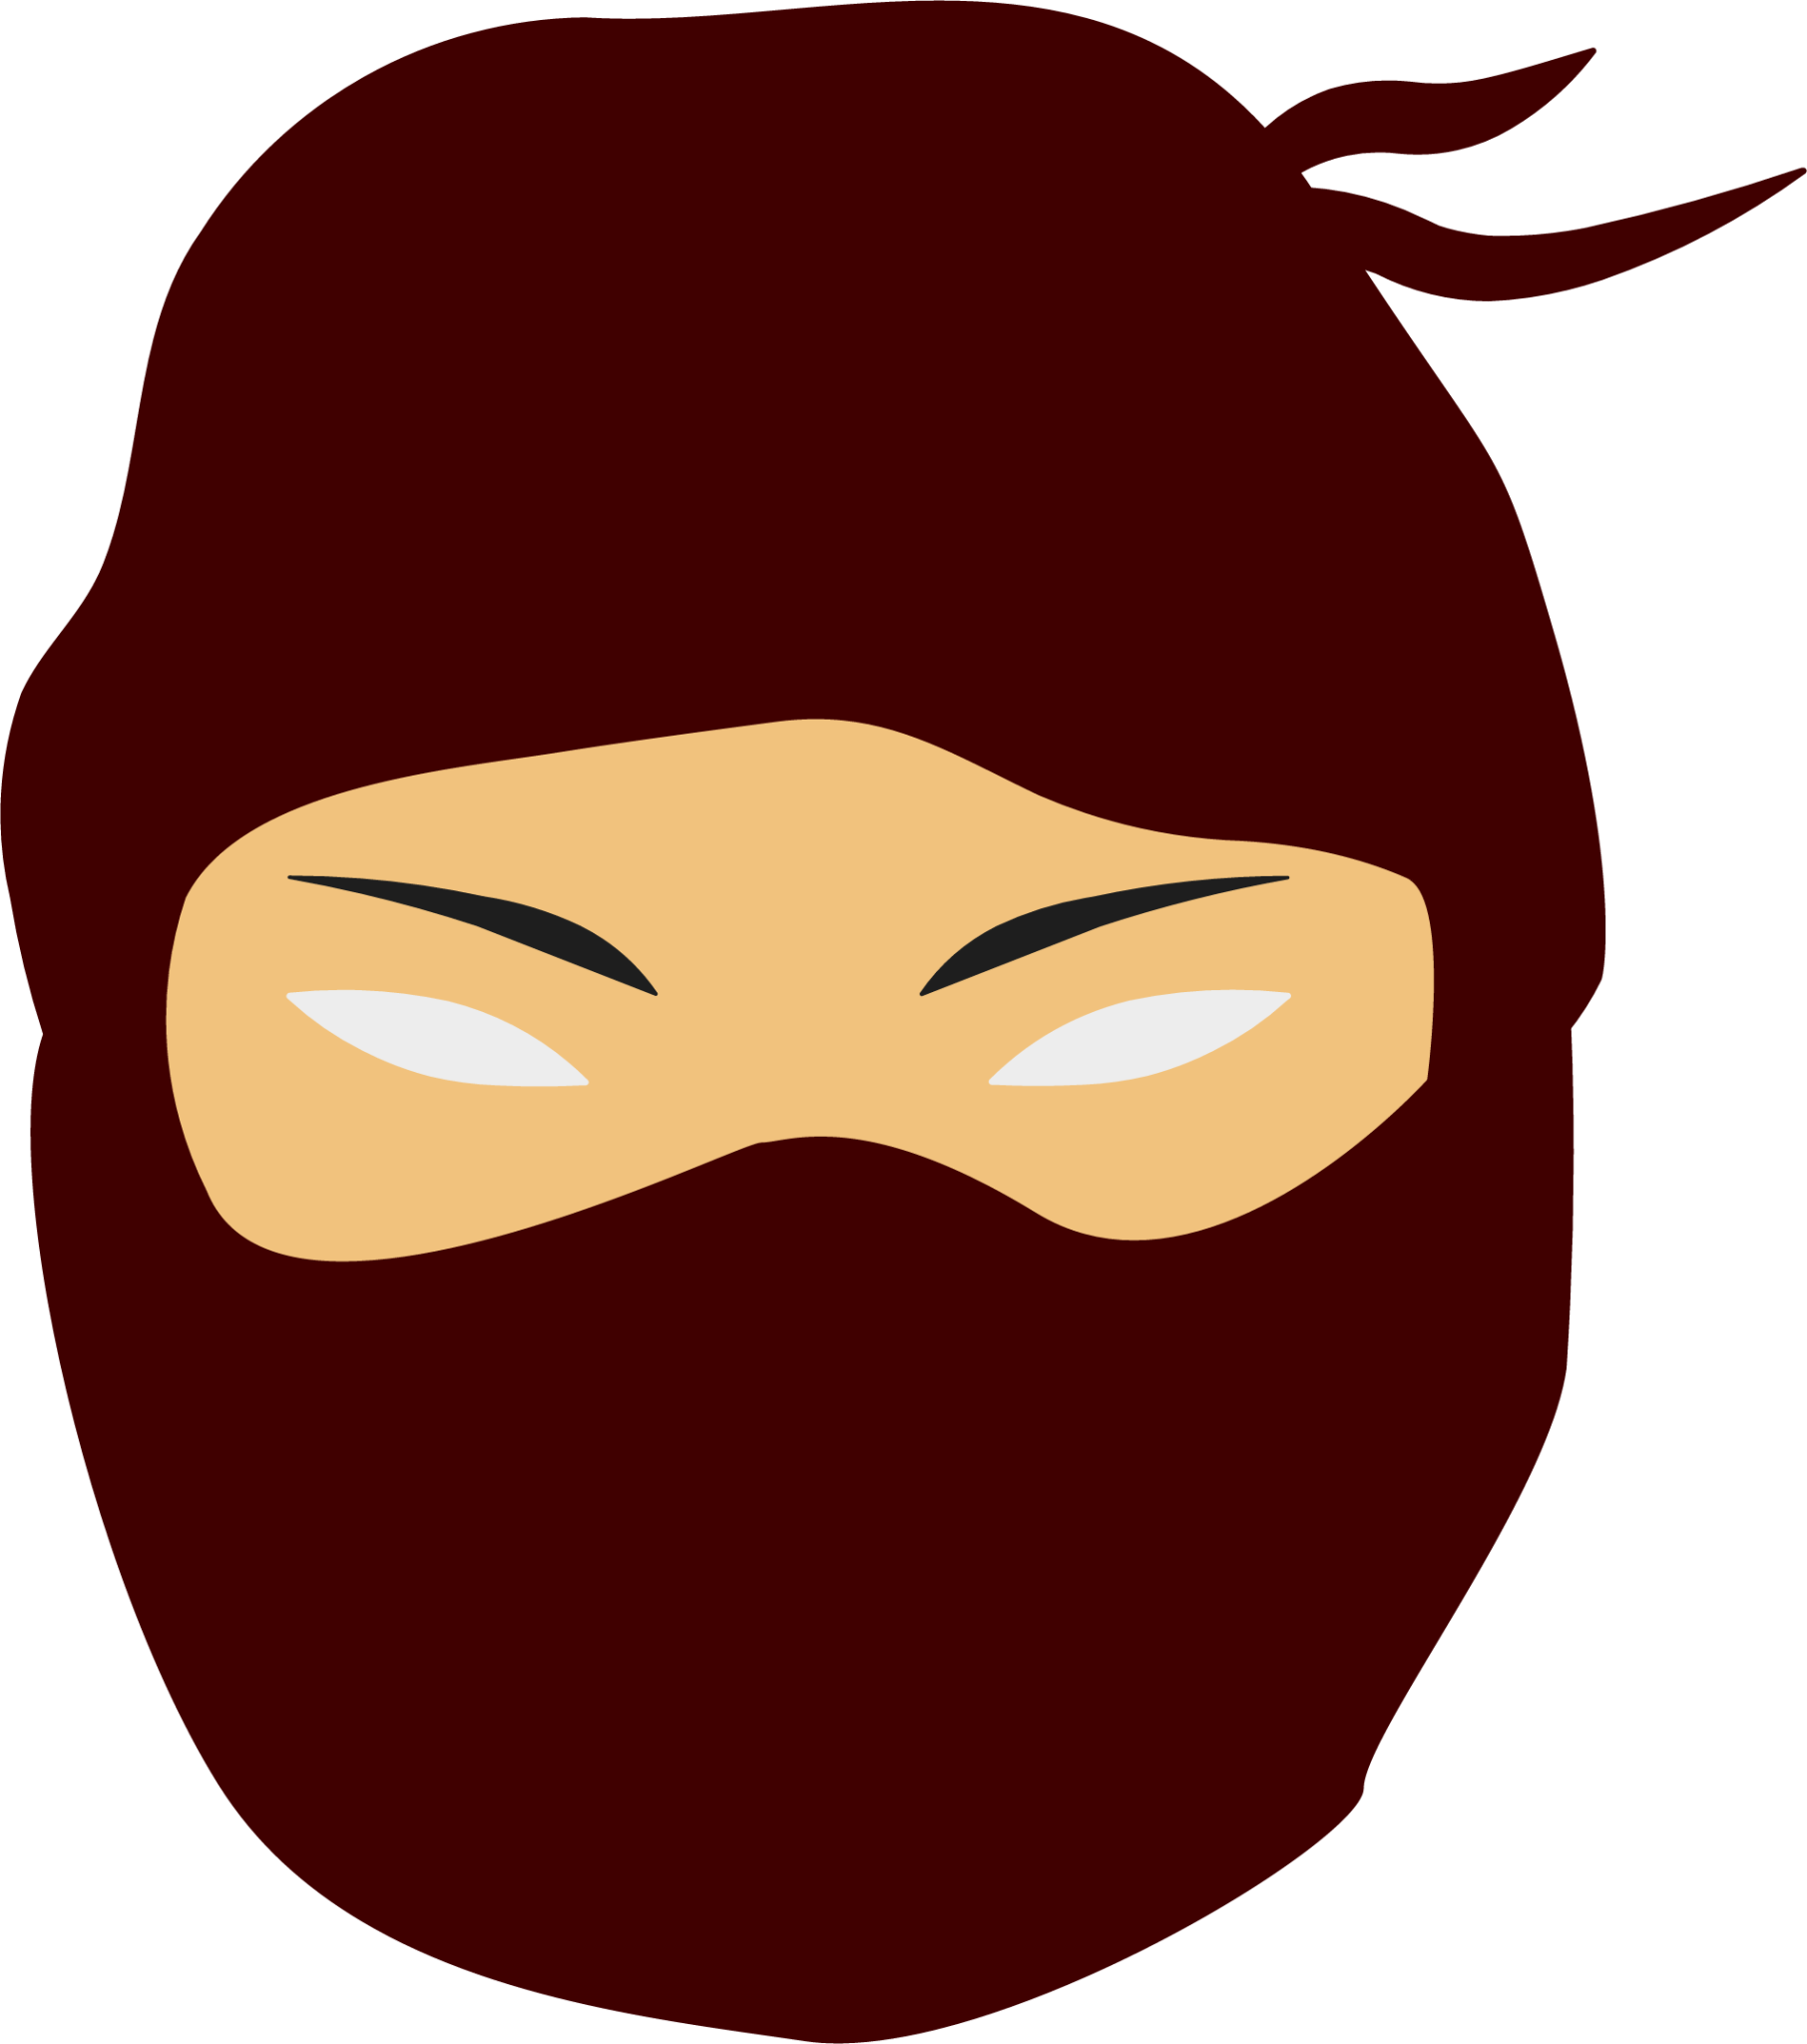 file type ninja icon